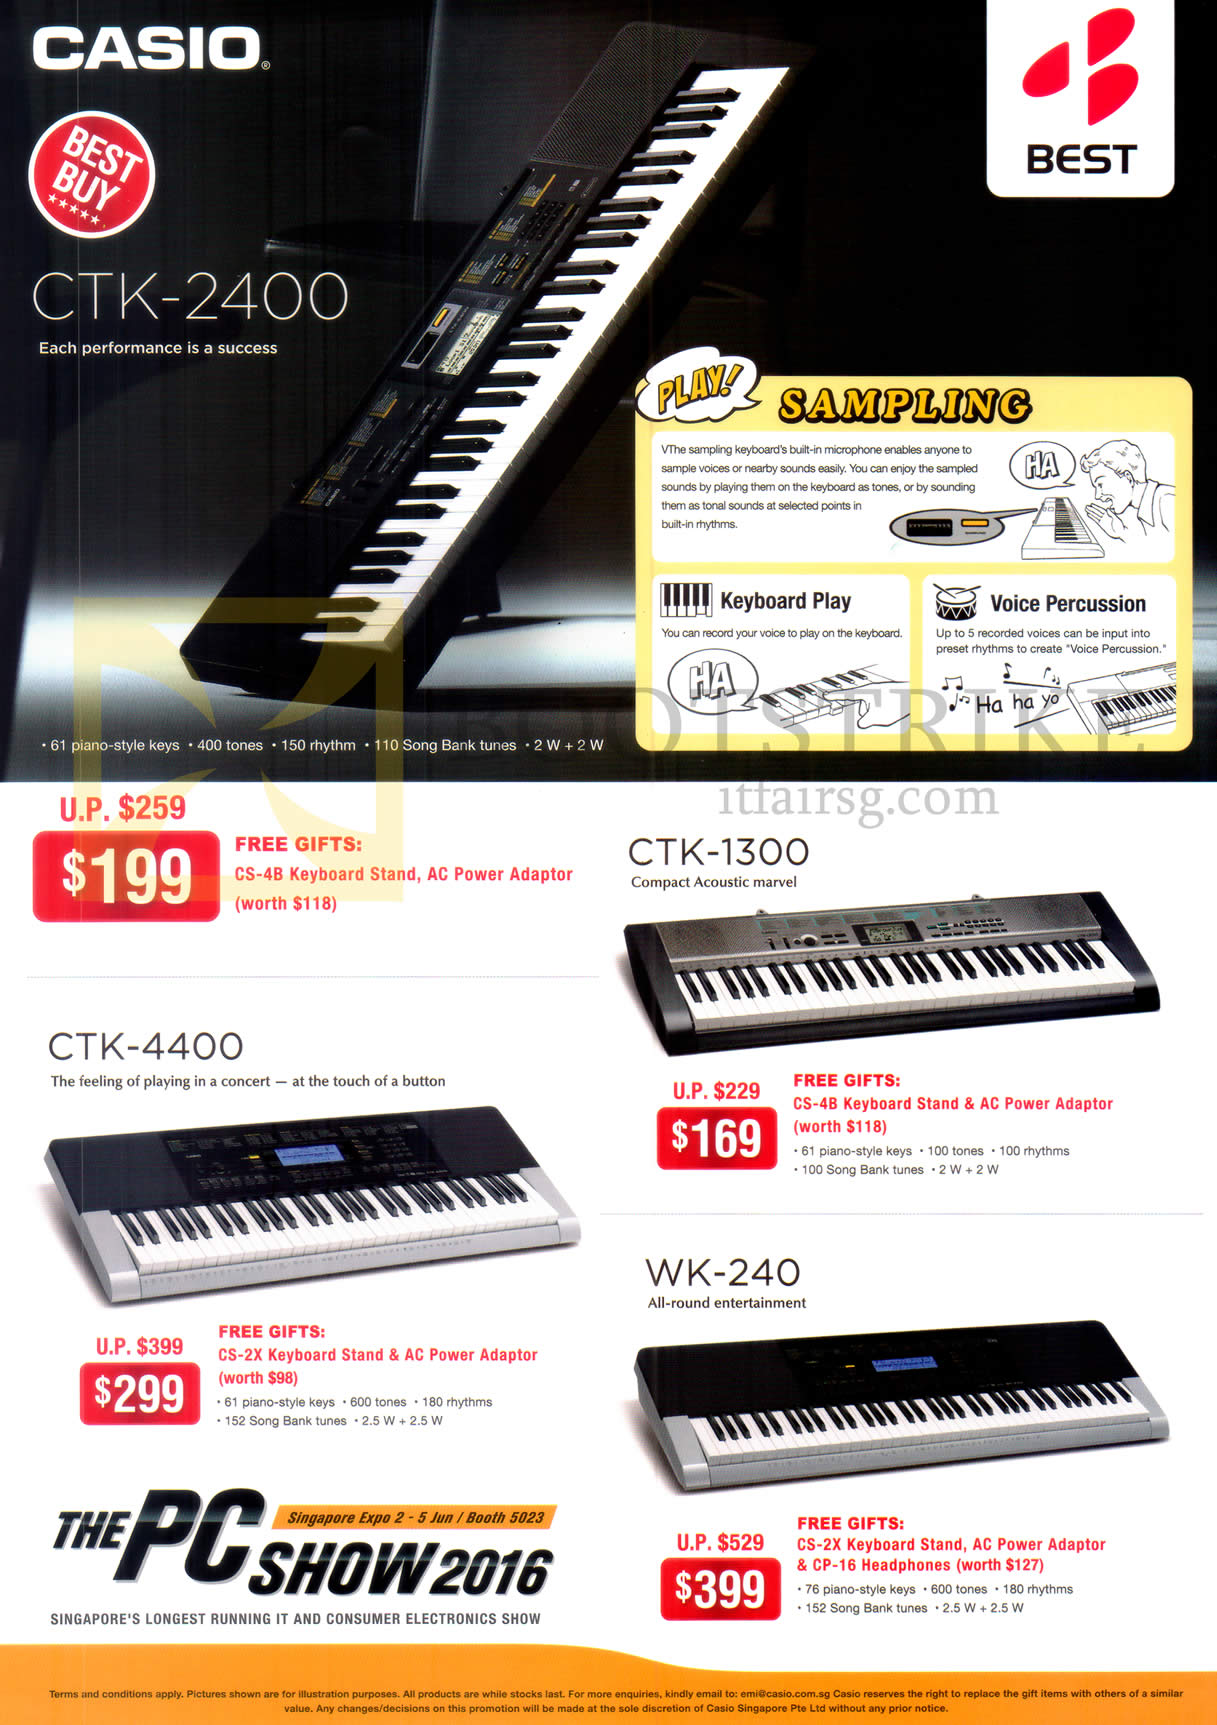 PC SHOW 2016 price list image brochure of Best Denki Casio Piano Keyboards CTK-2400, 1300, 4400, WK-240